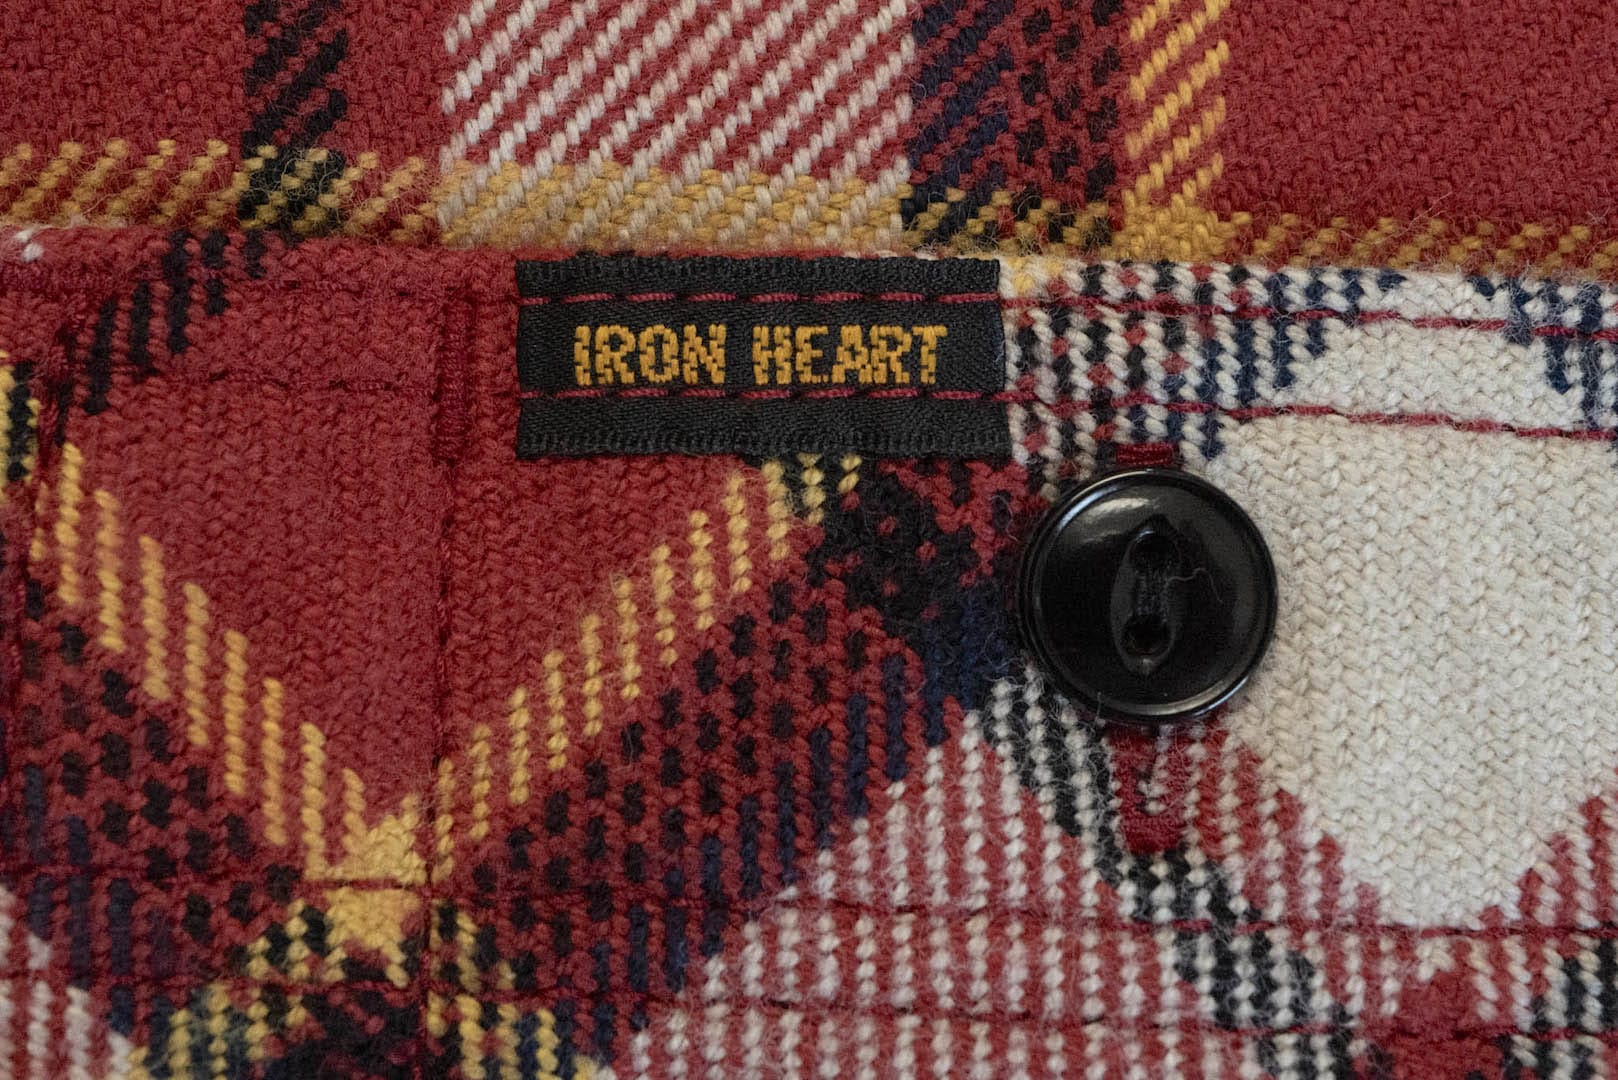 Iron Heart Ultra-Heavy Flannel Classic Check Work Shirt (Raspberry)